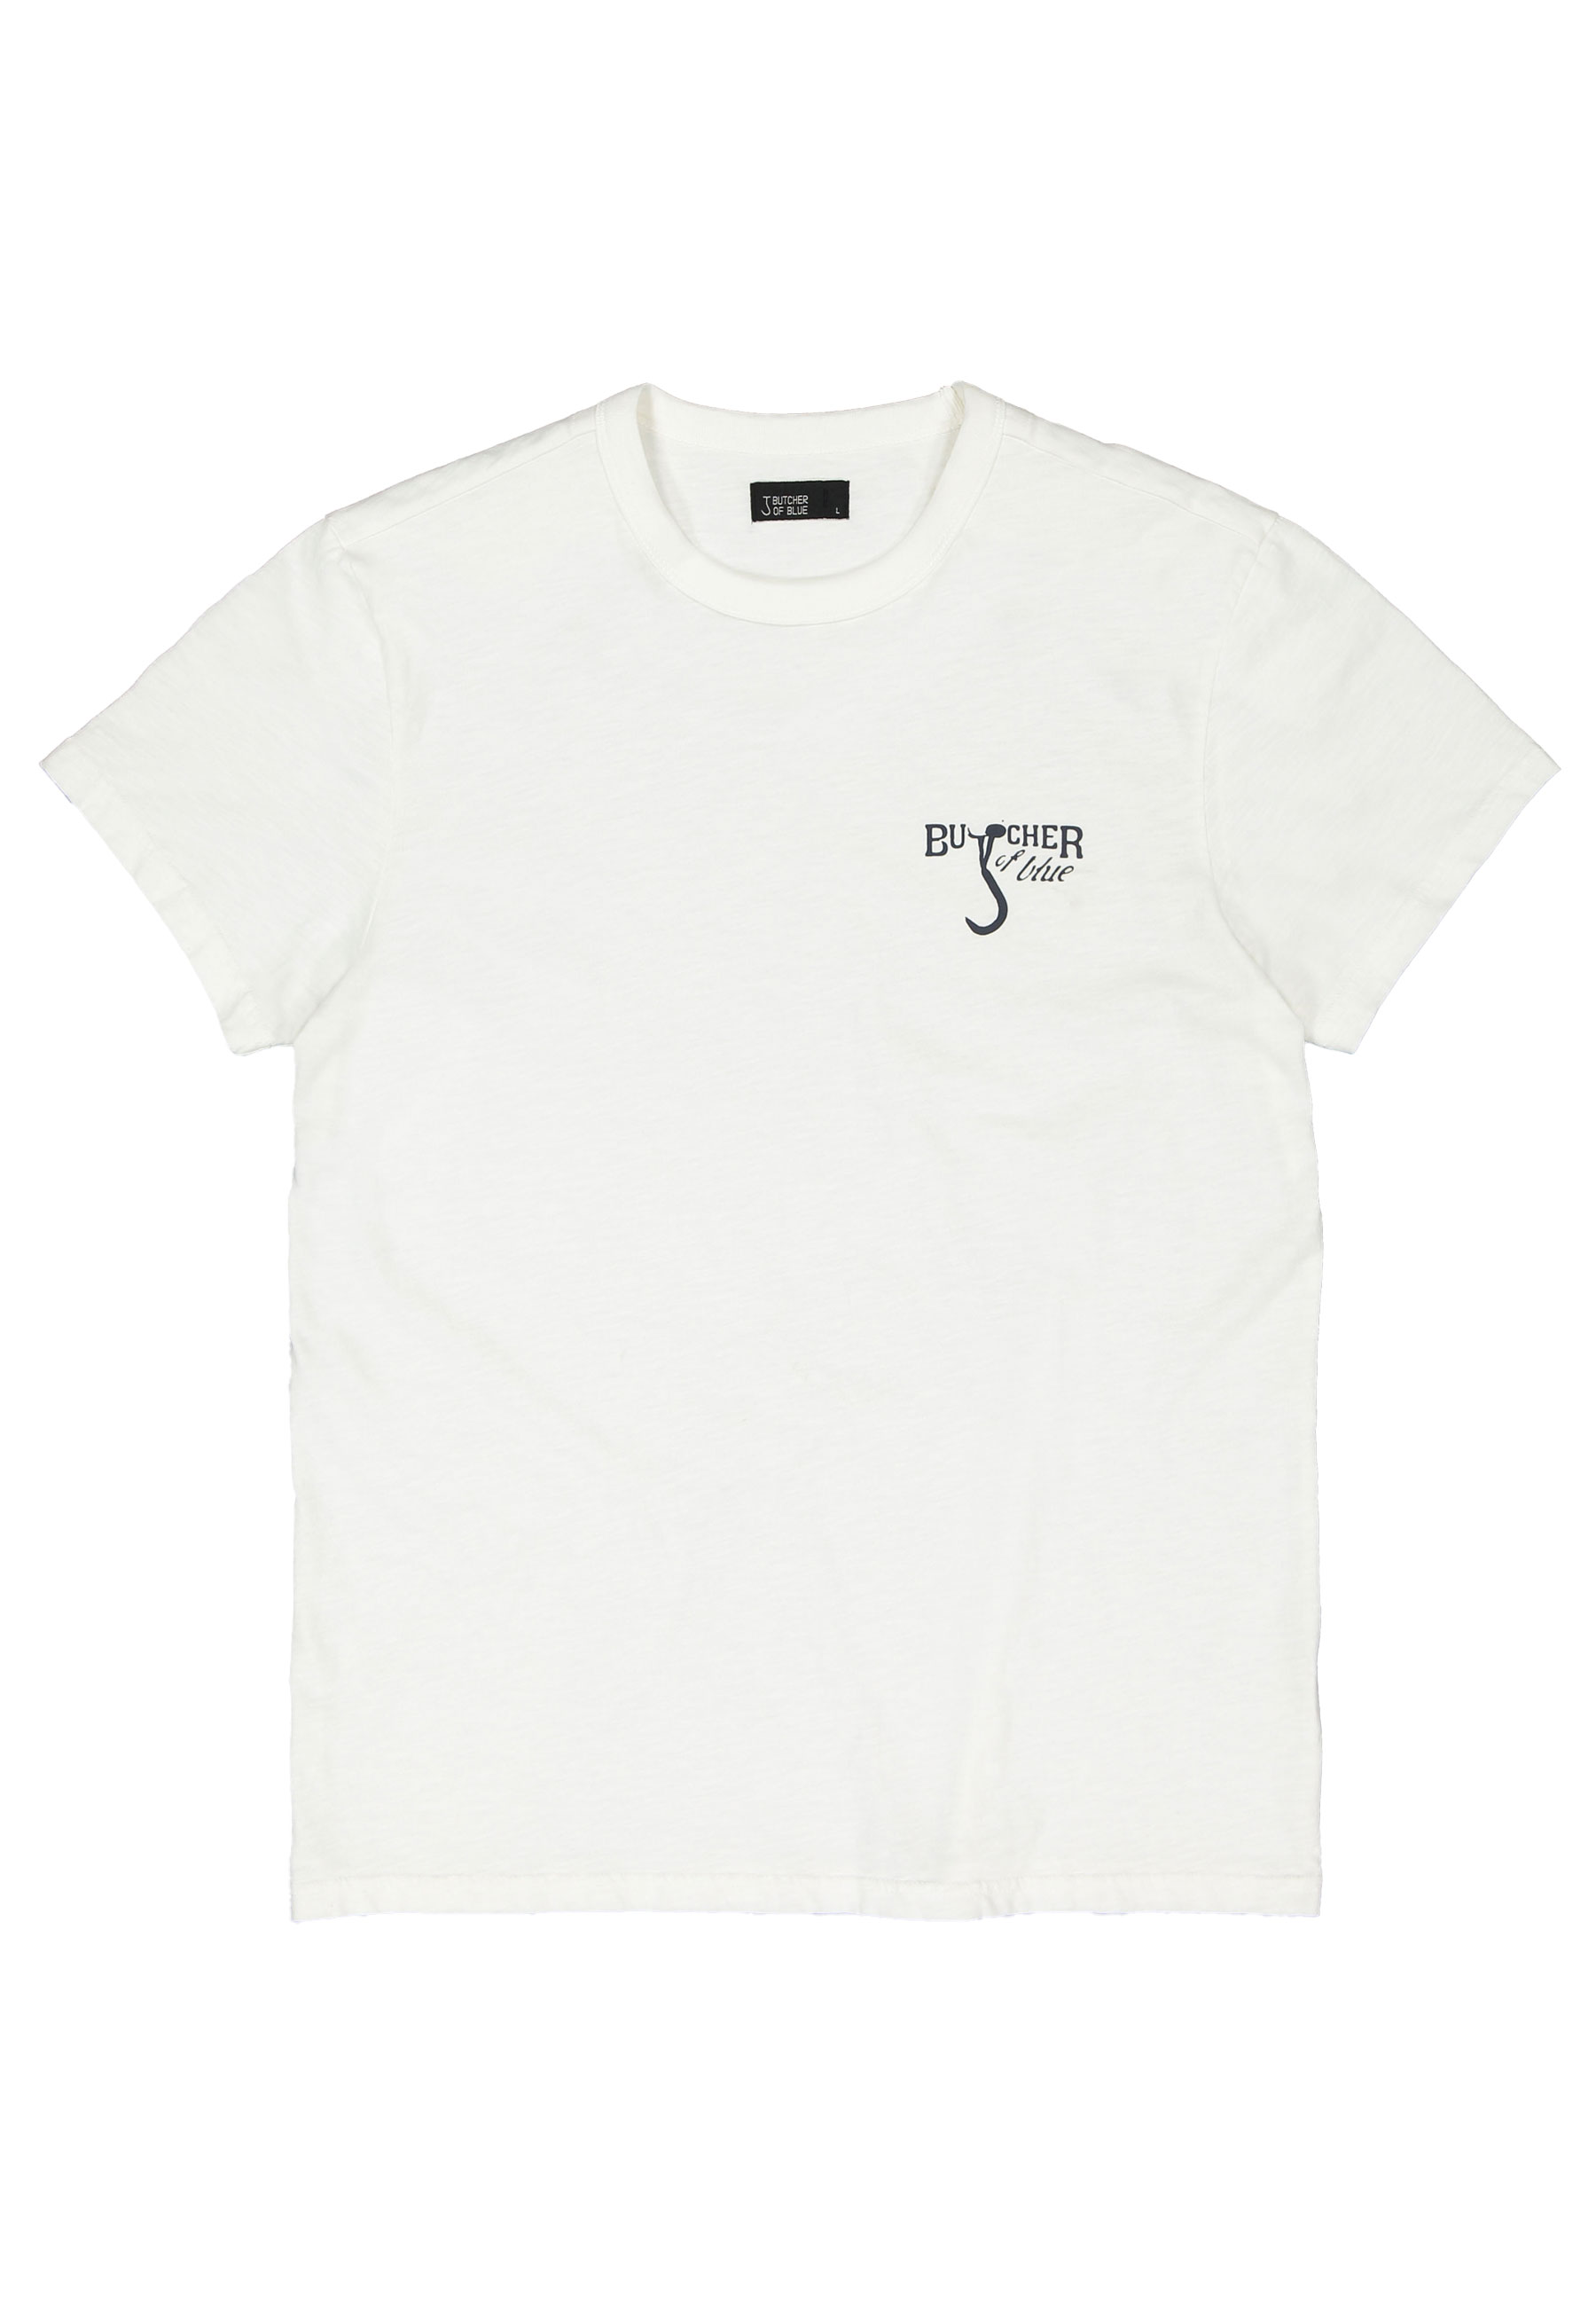 Shirt Wit Fesco small vintage t-shirts wit